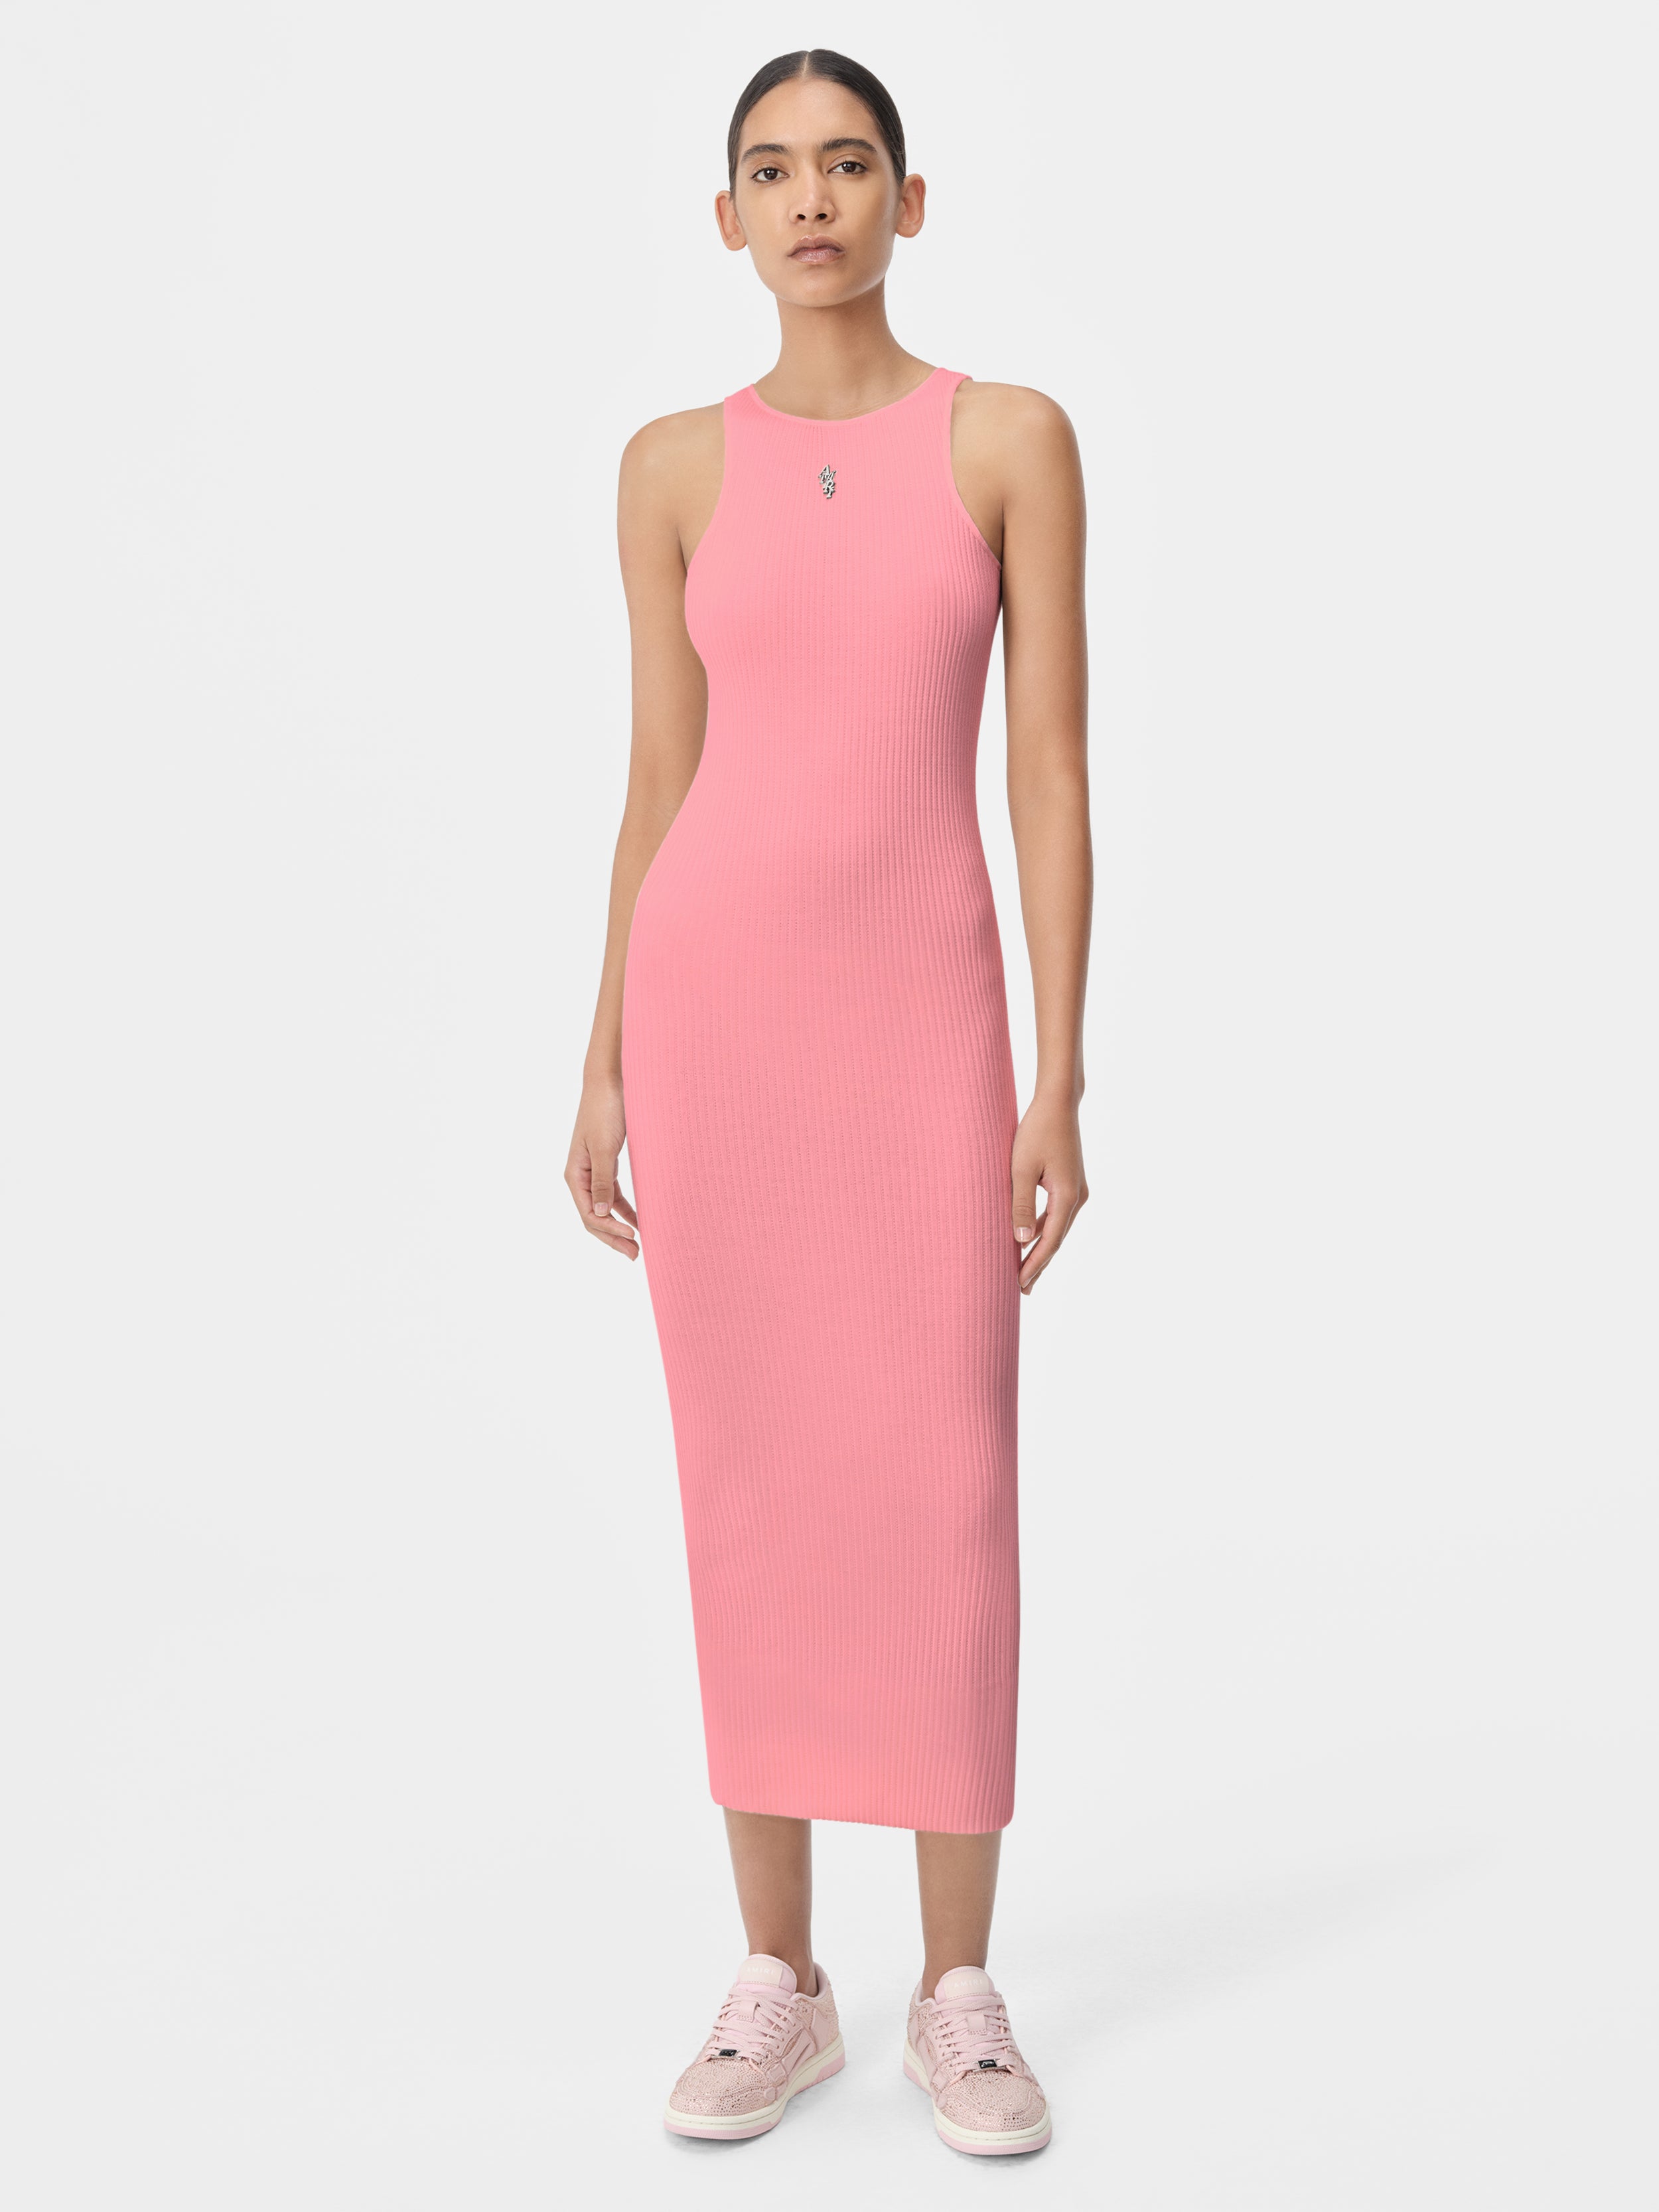 Product WOMEN - WOMEN'S AMIRI STACKED MAXI DRESS - Flamingo Pink featured image